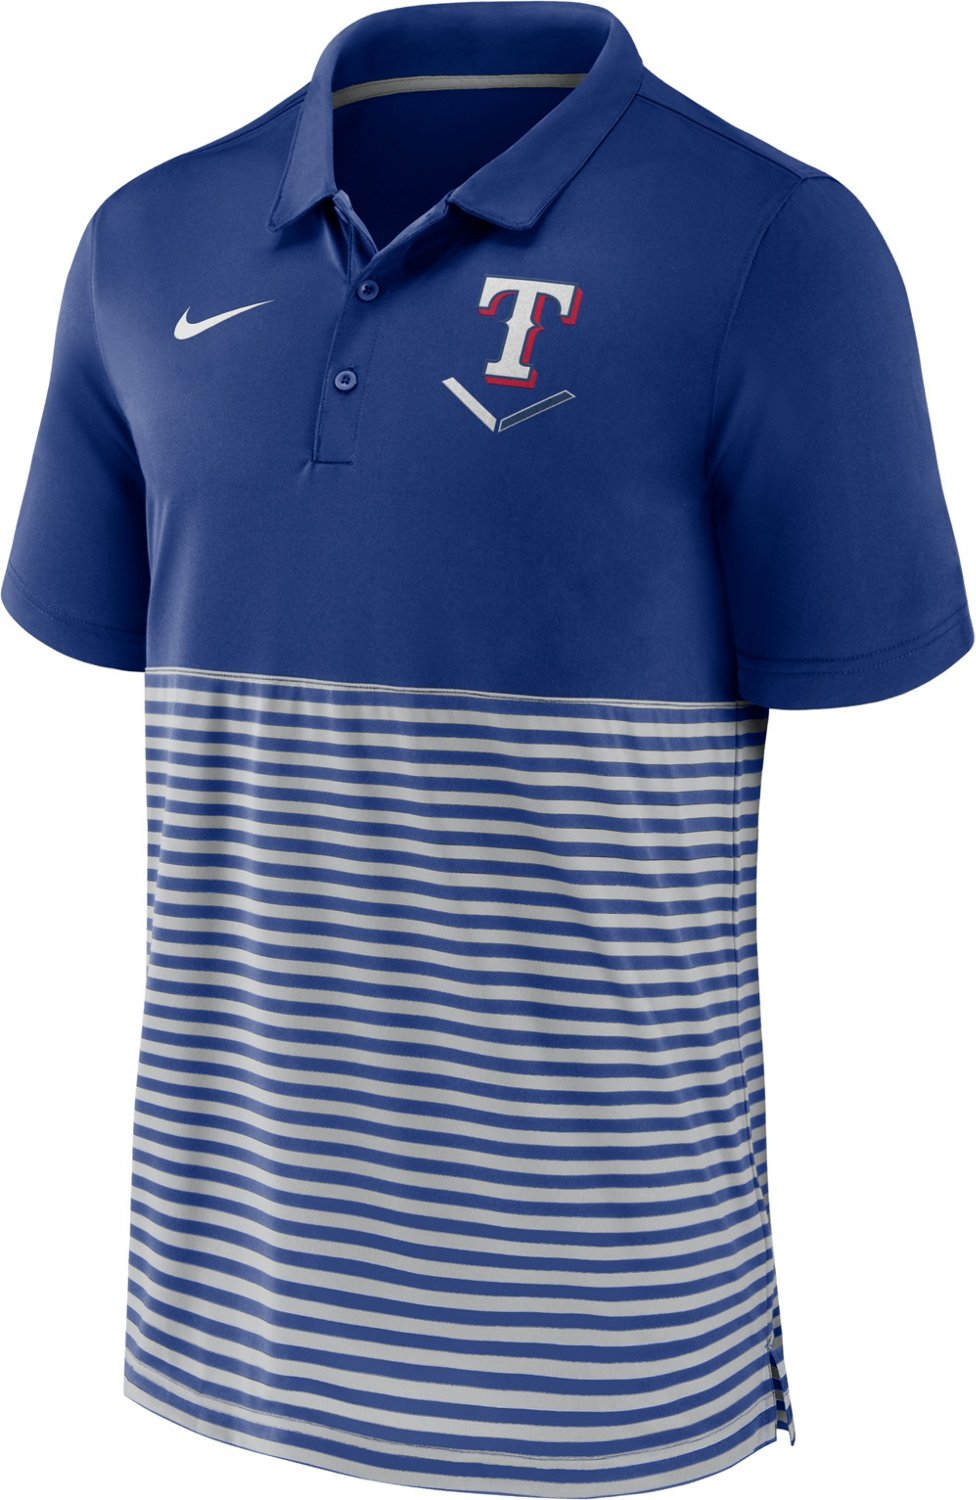 Nike Men's Texas Rangers Home Plate Striped Short Sleeve Polo